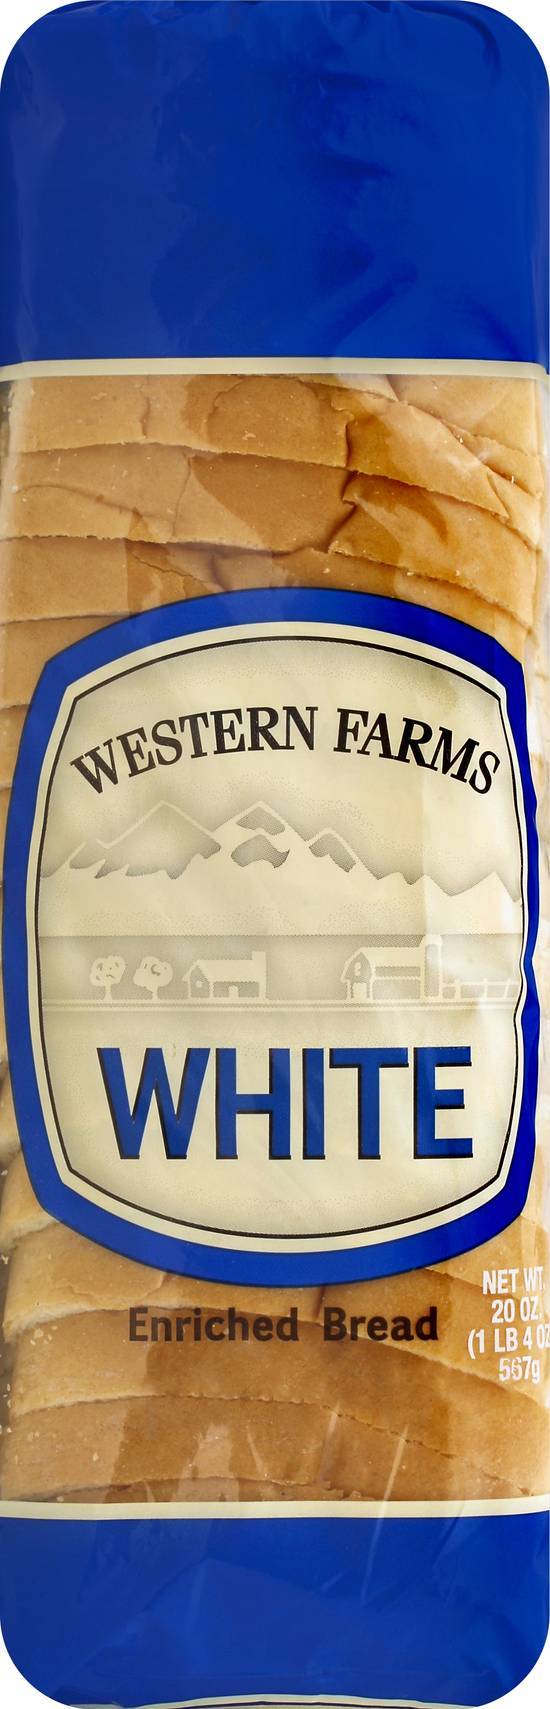 Western Farms White Bread